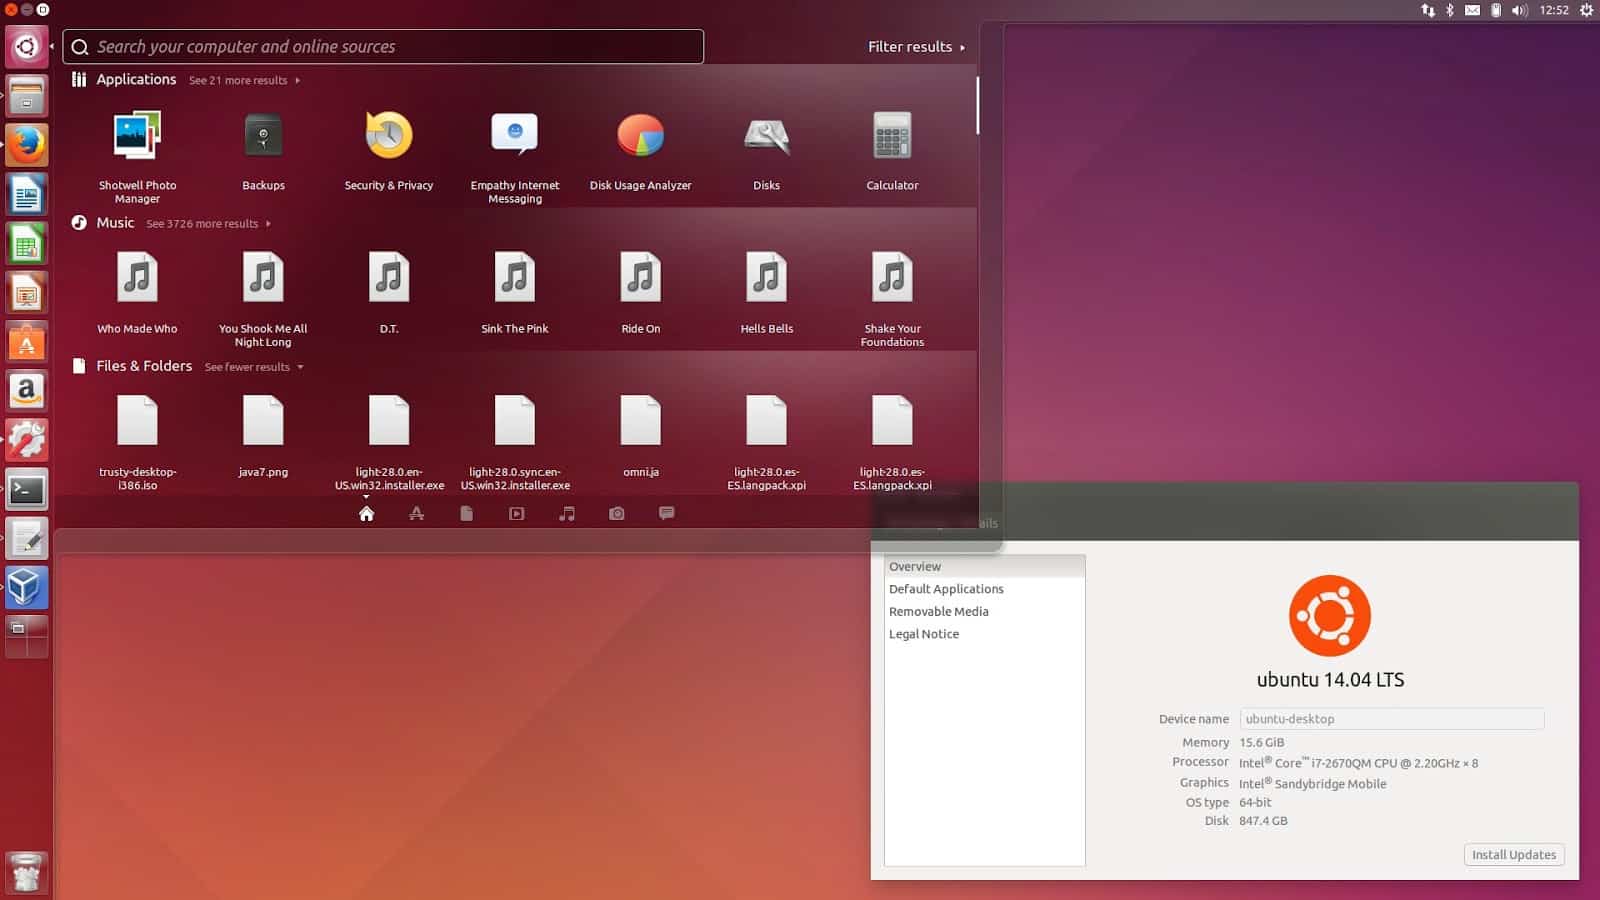 Ubuntu server 14.04